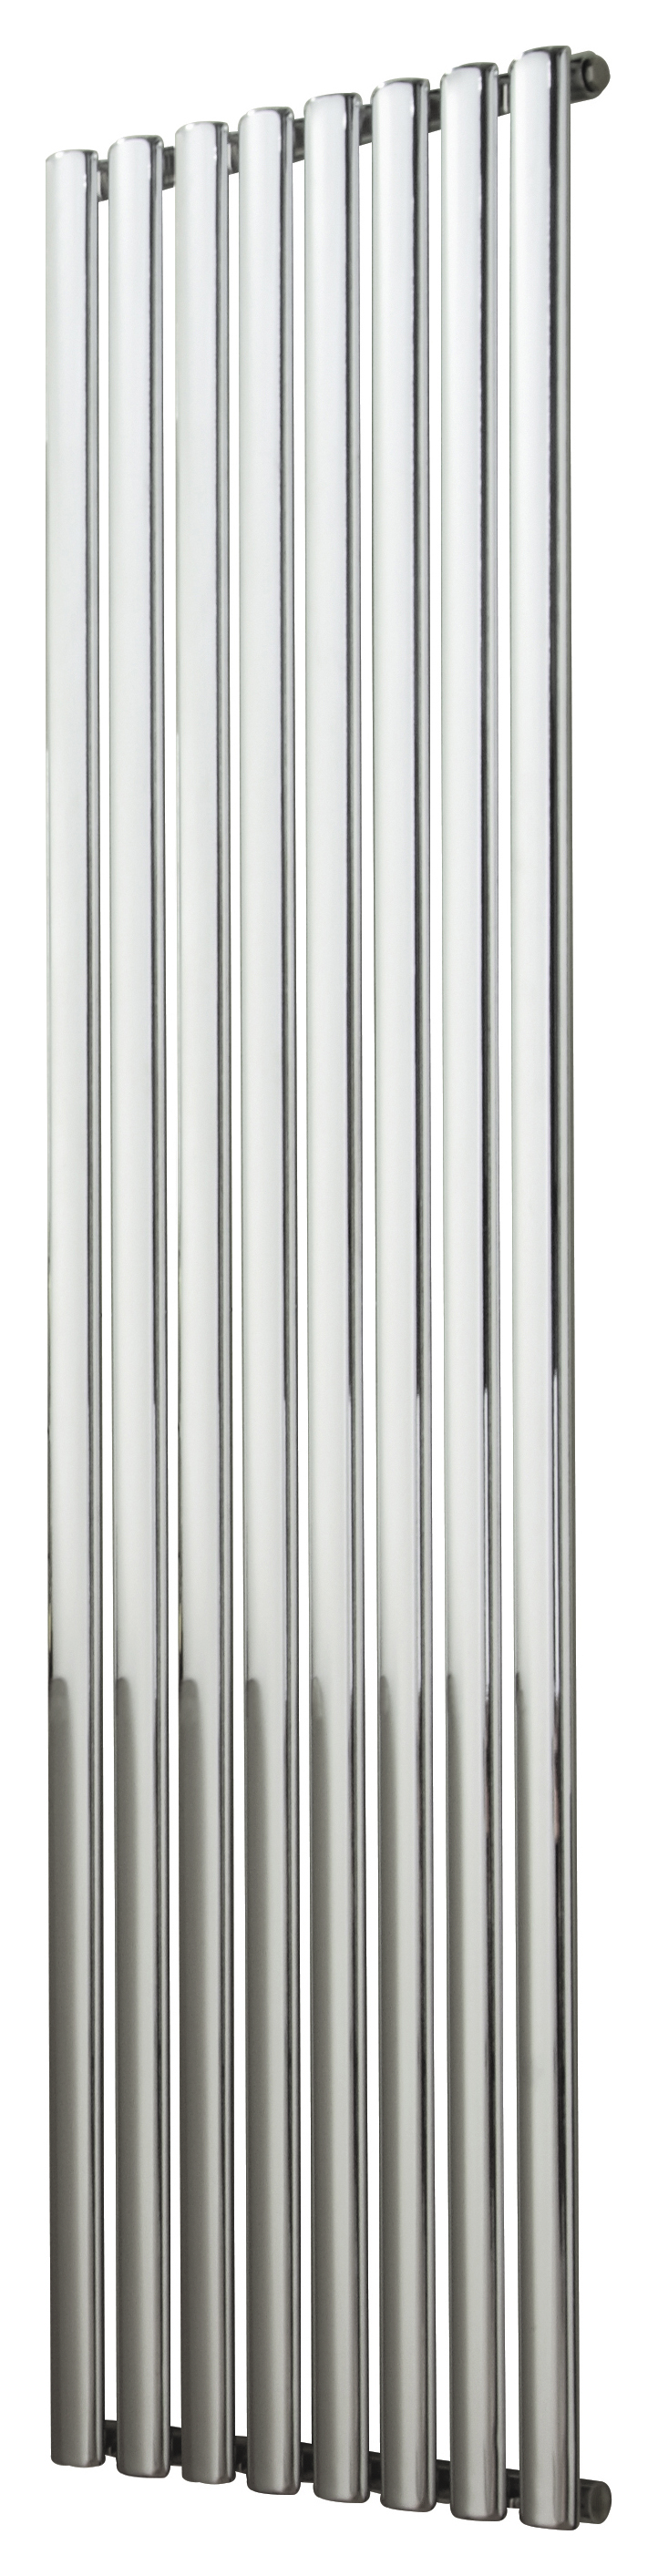 Image of Towelrads Chrome Dorney Vertical Designer Radiator - 1800 x 472mm